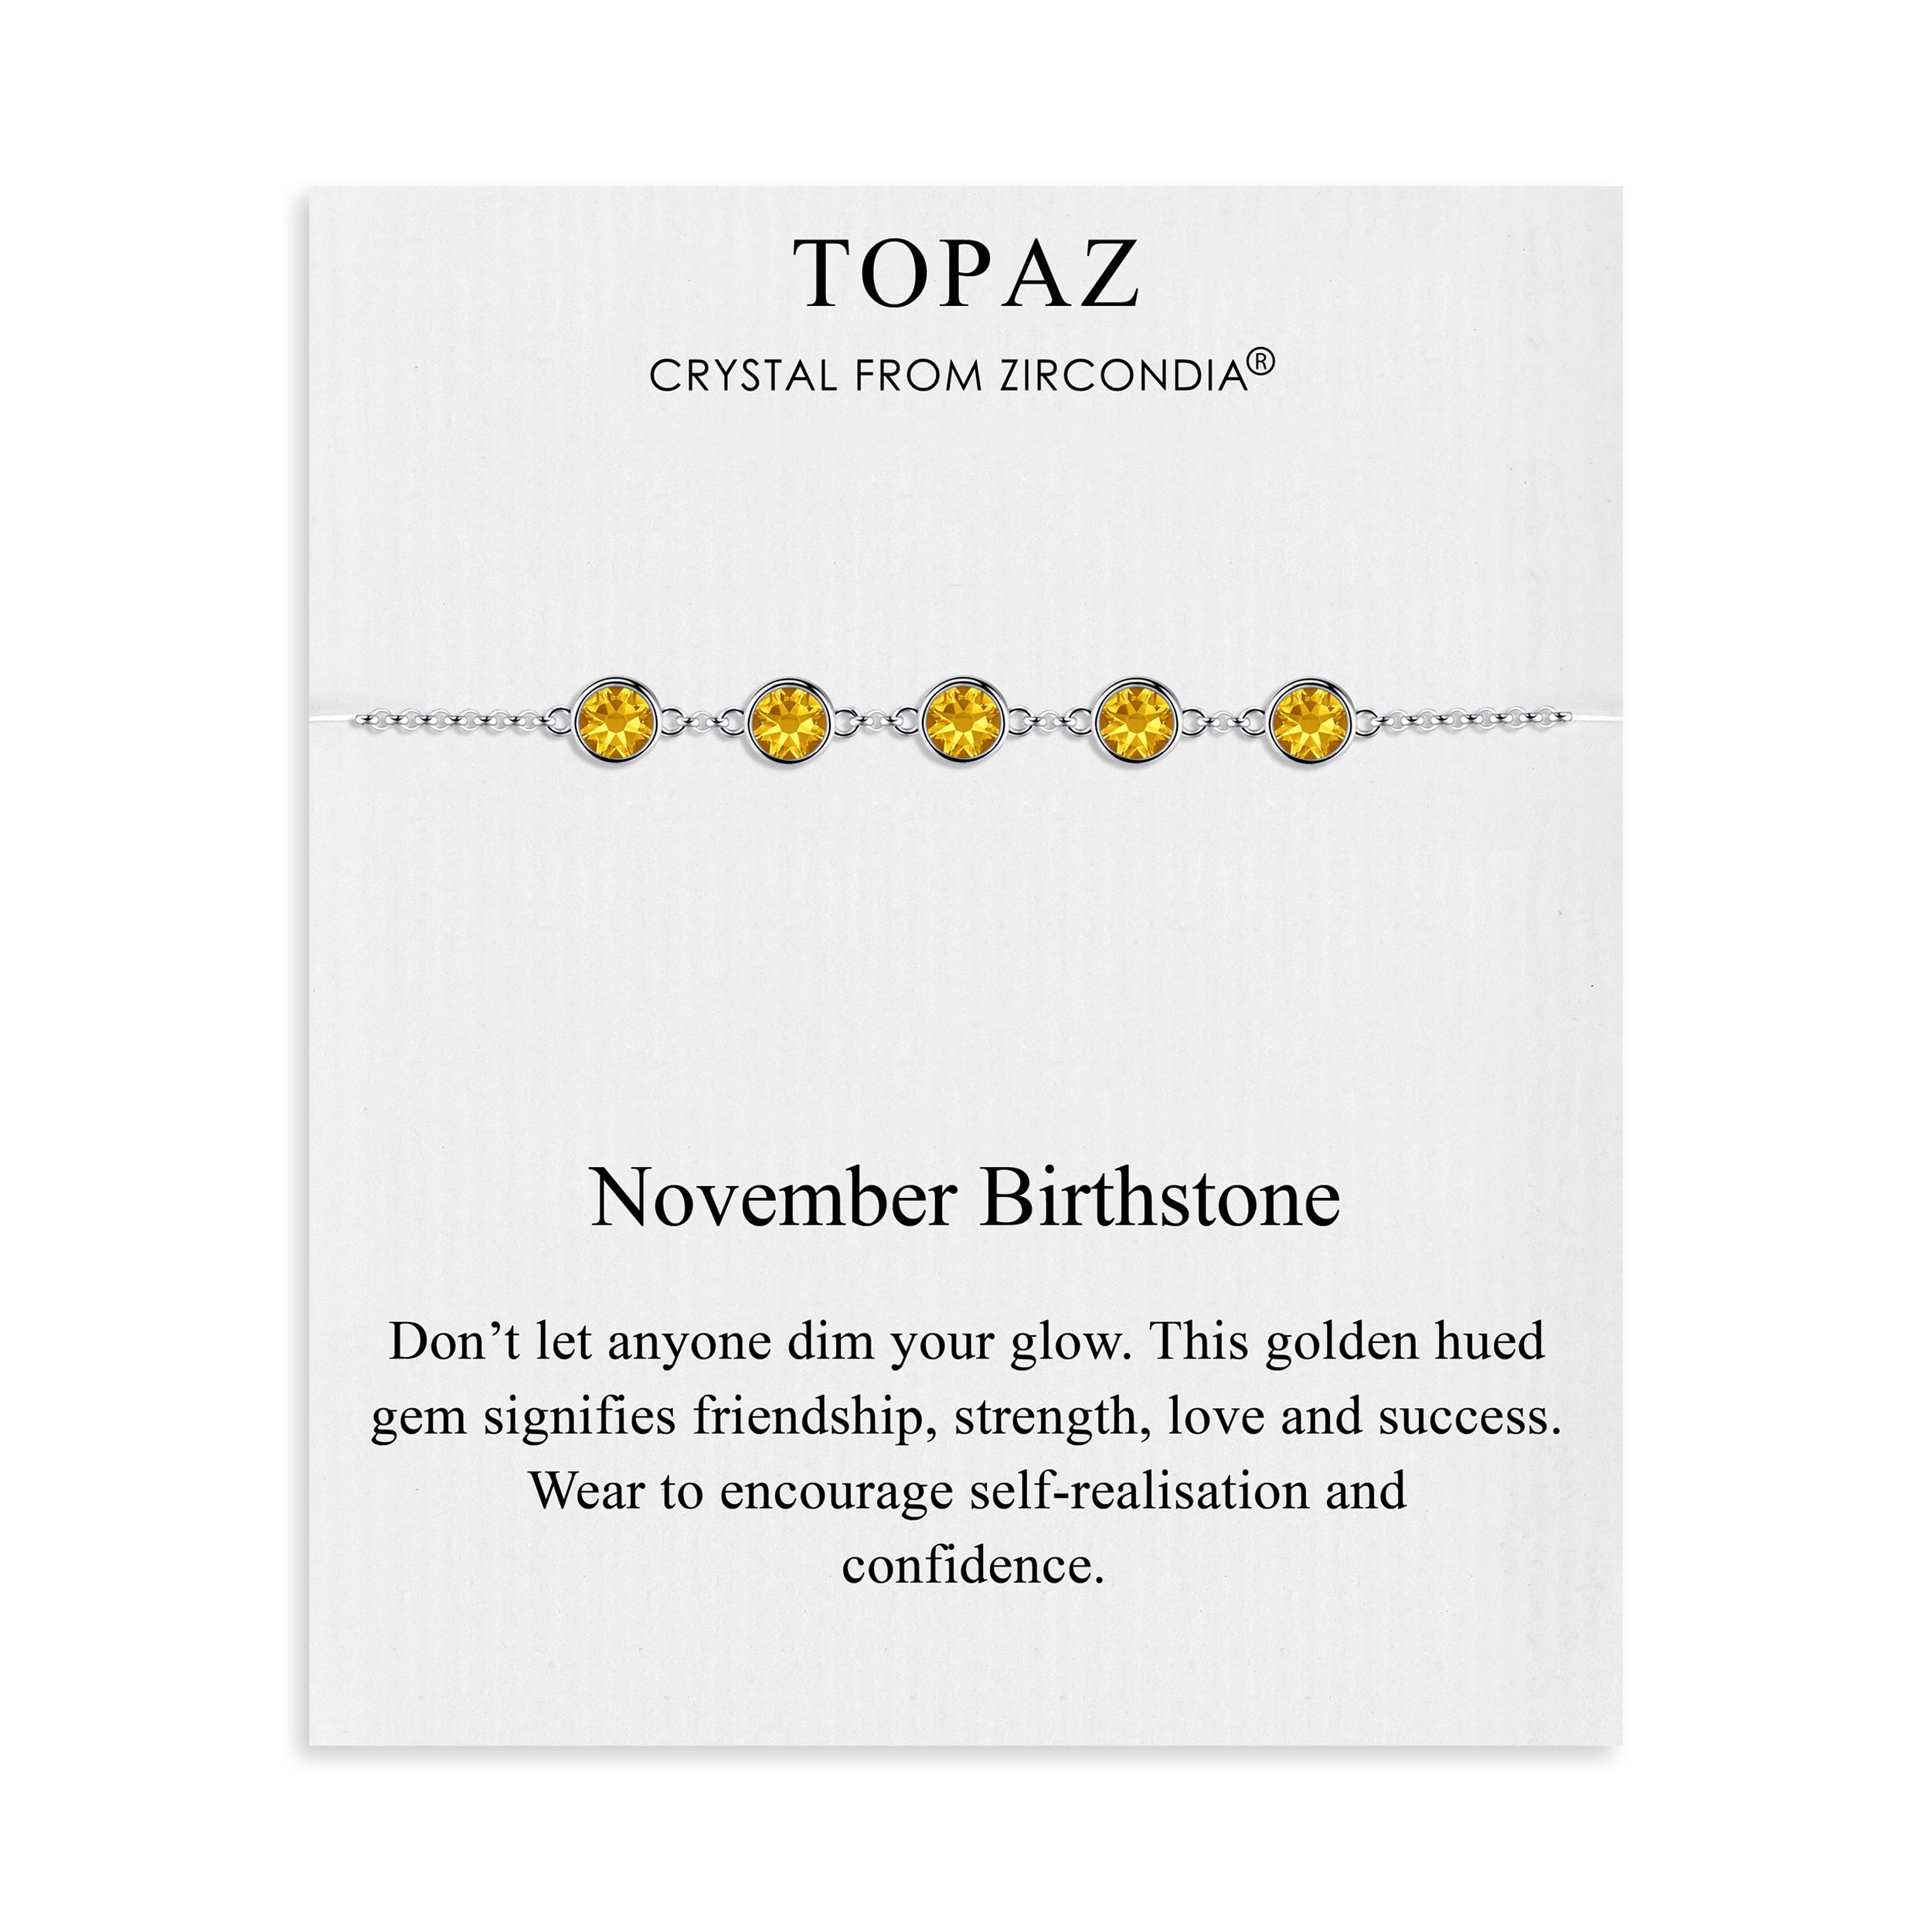 November Birthstone Bracelet Created with Topaz Zircondia® Crystals